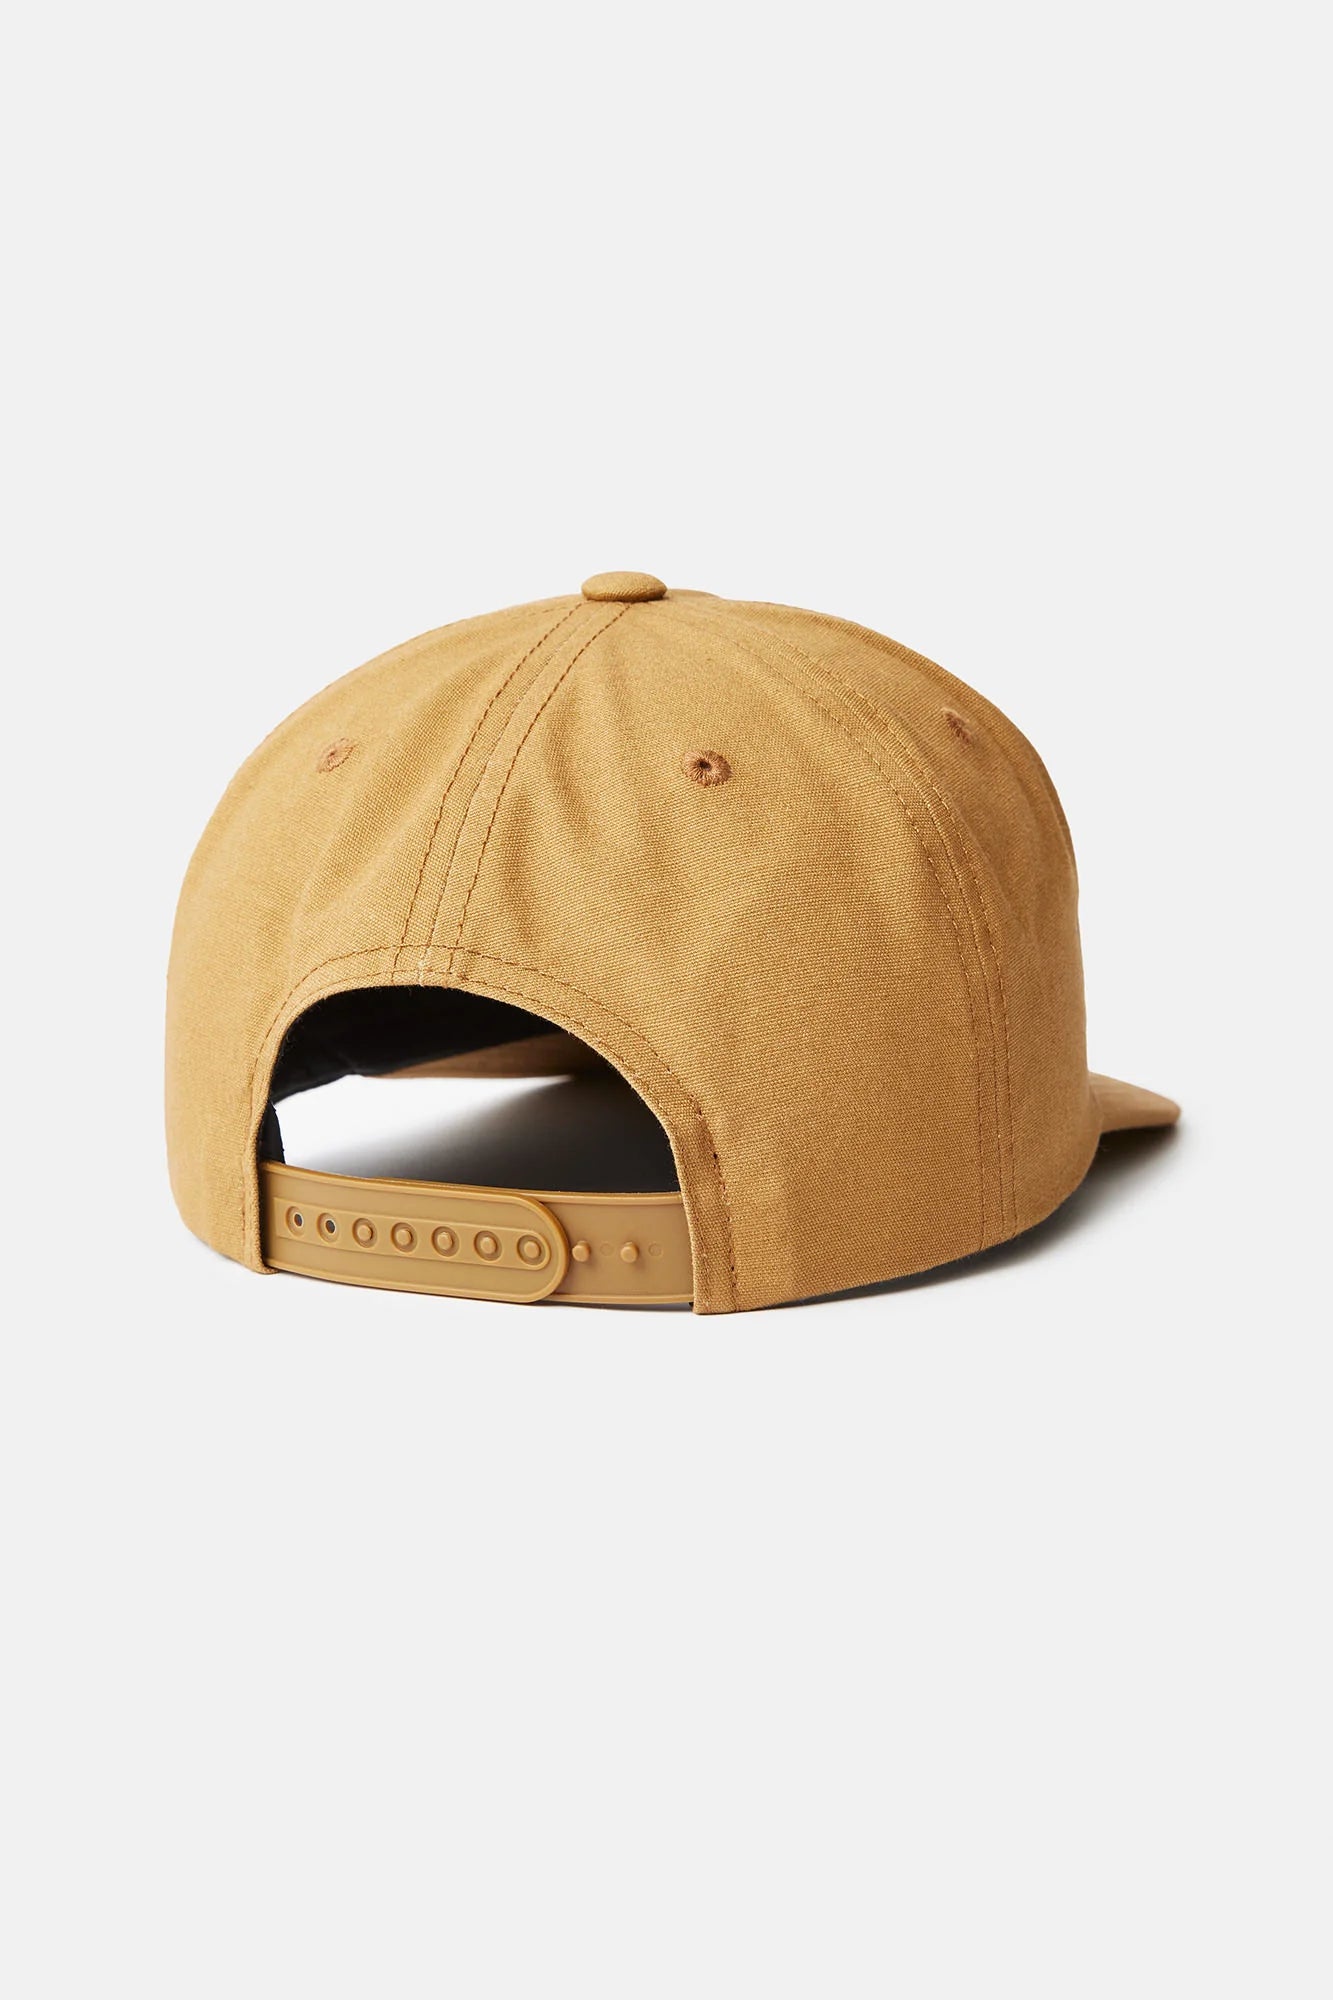 Katin USA - Quality Hat